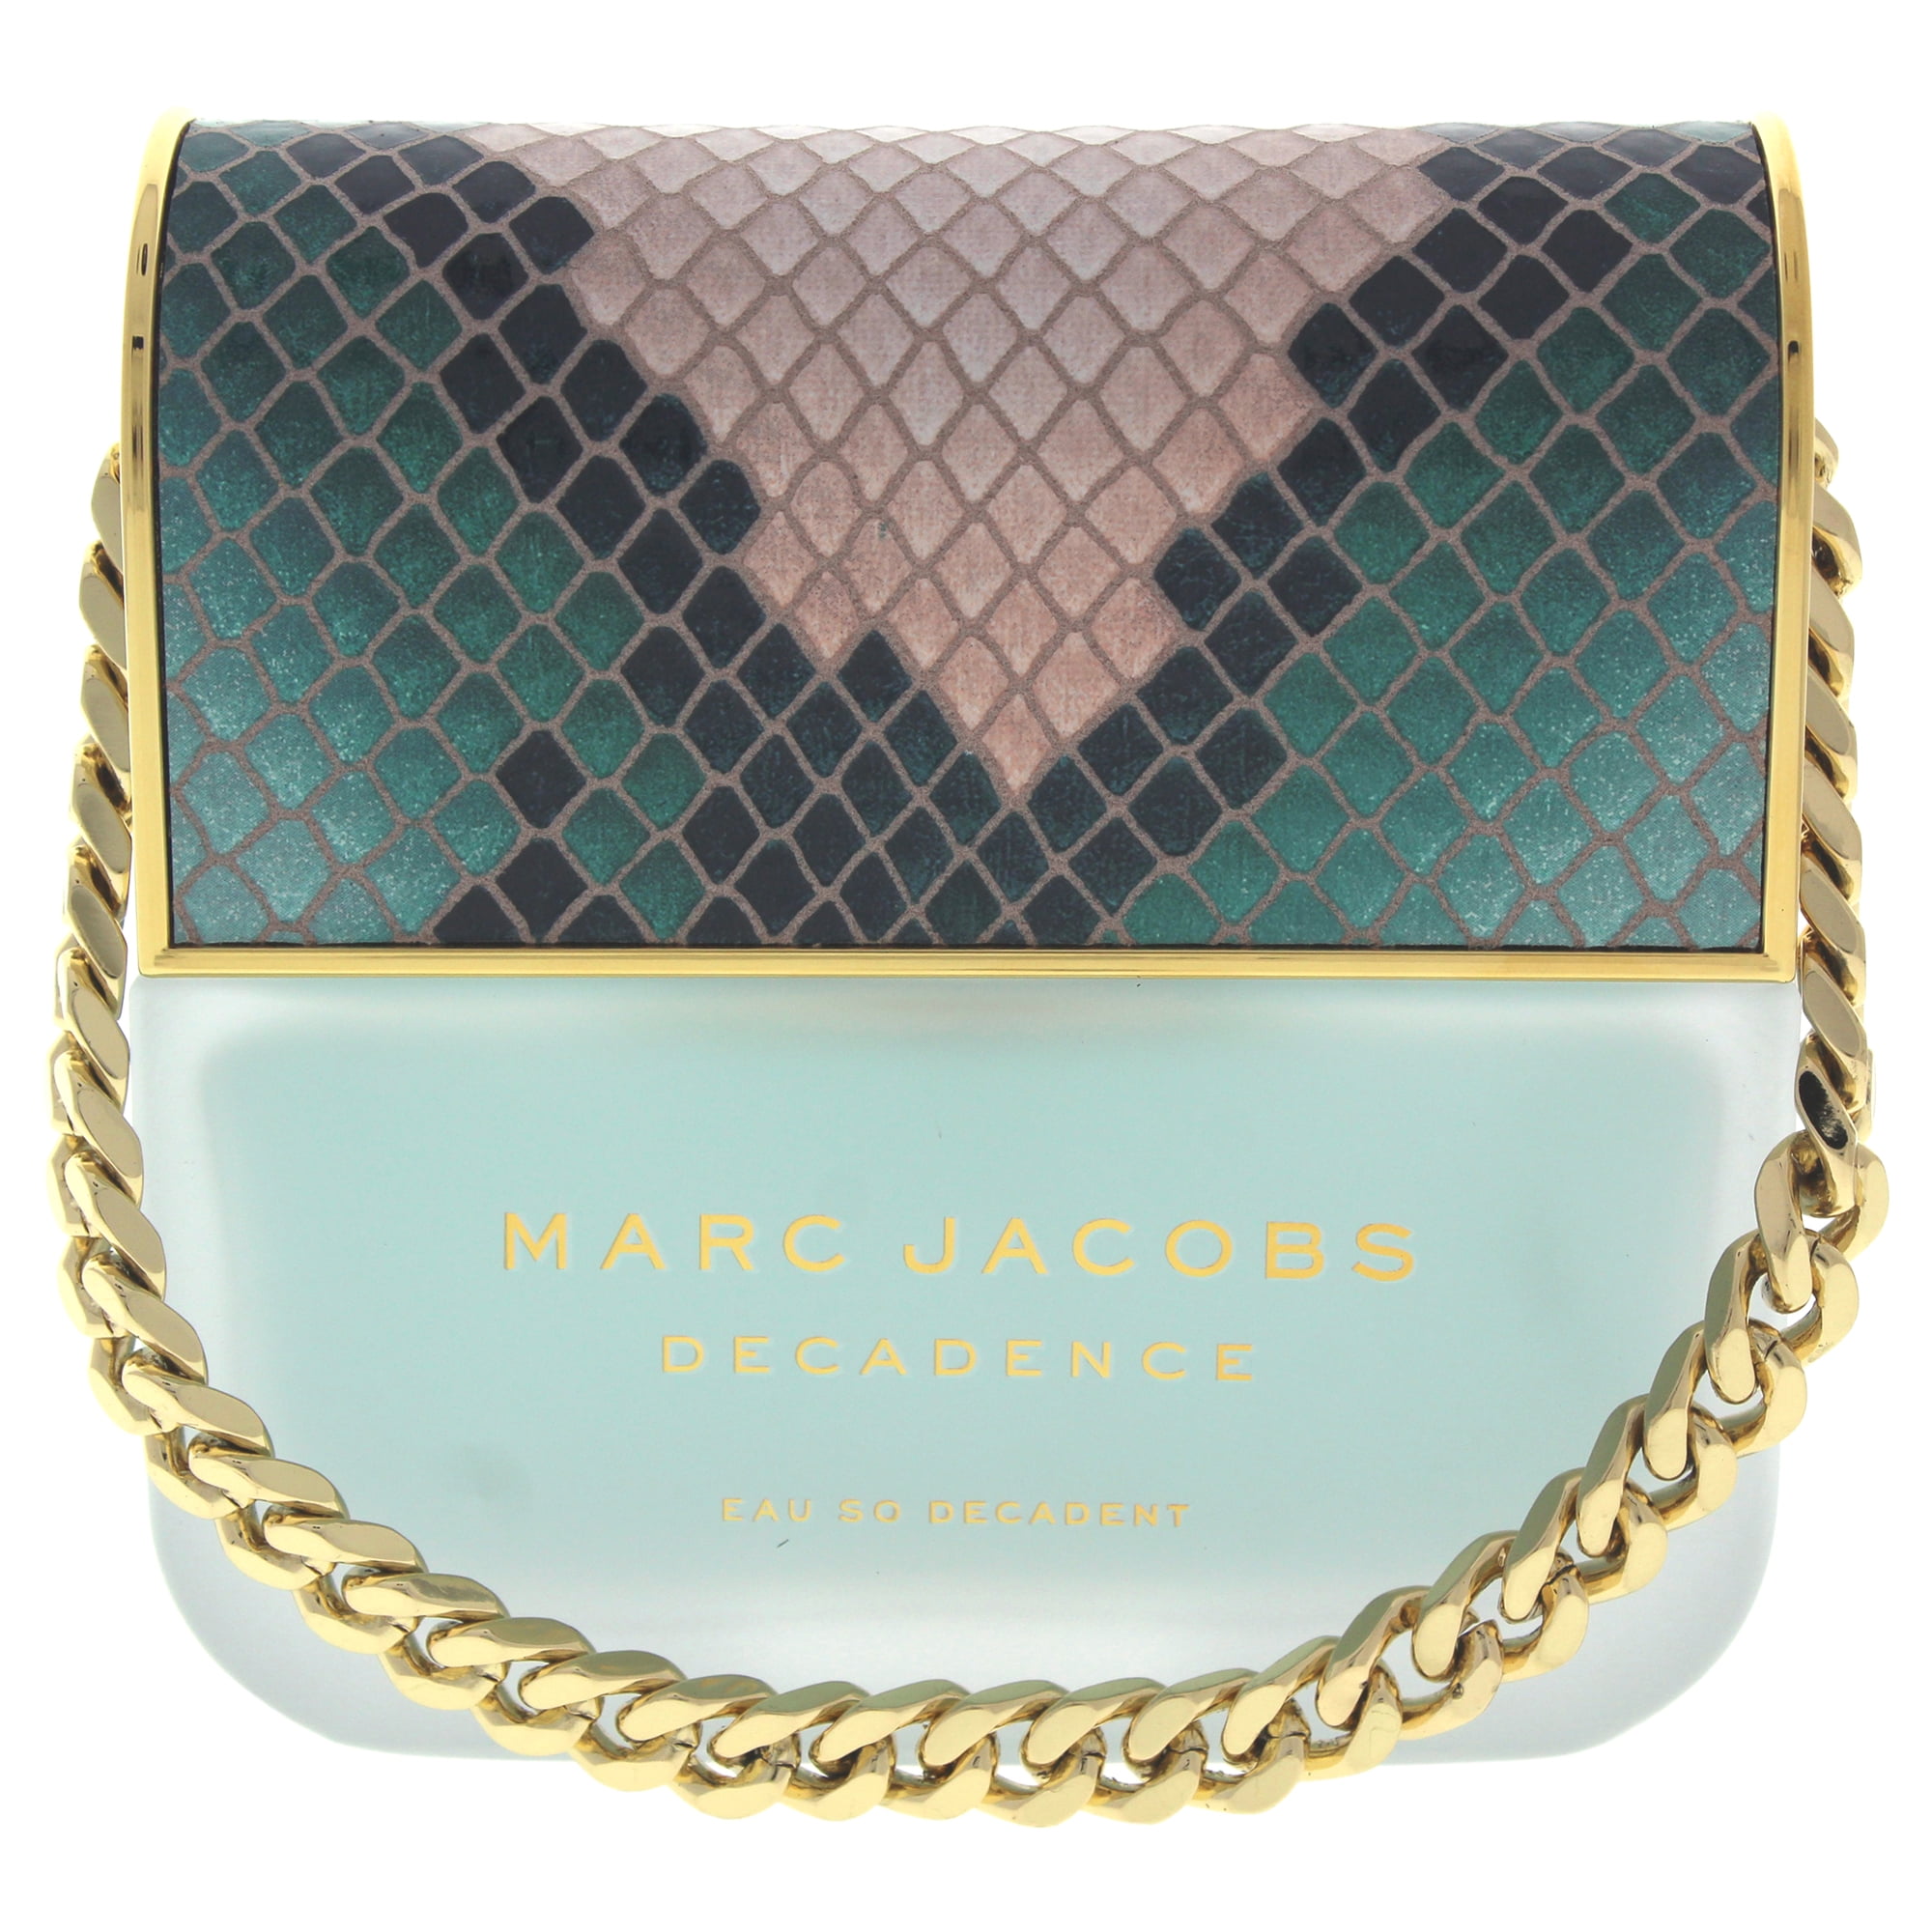 Marc Jacobs Decadence Eau So Decadent Eau de Toilette, Perfume for ...